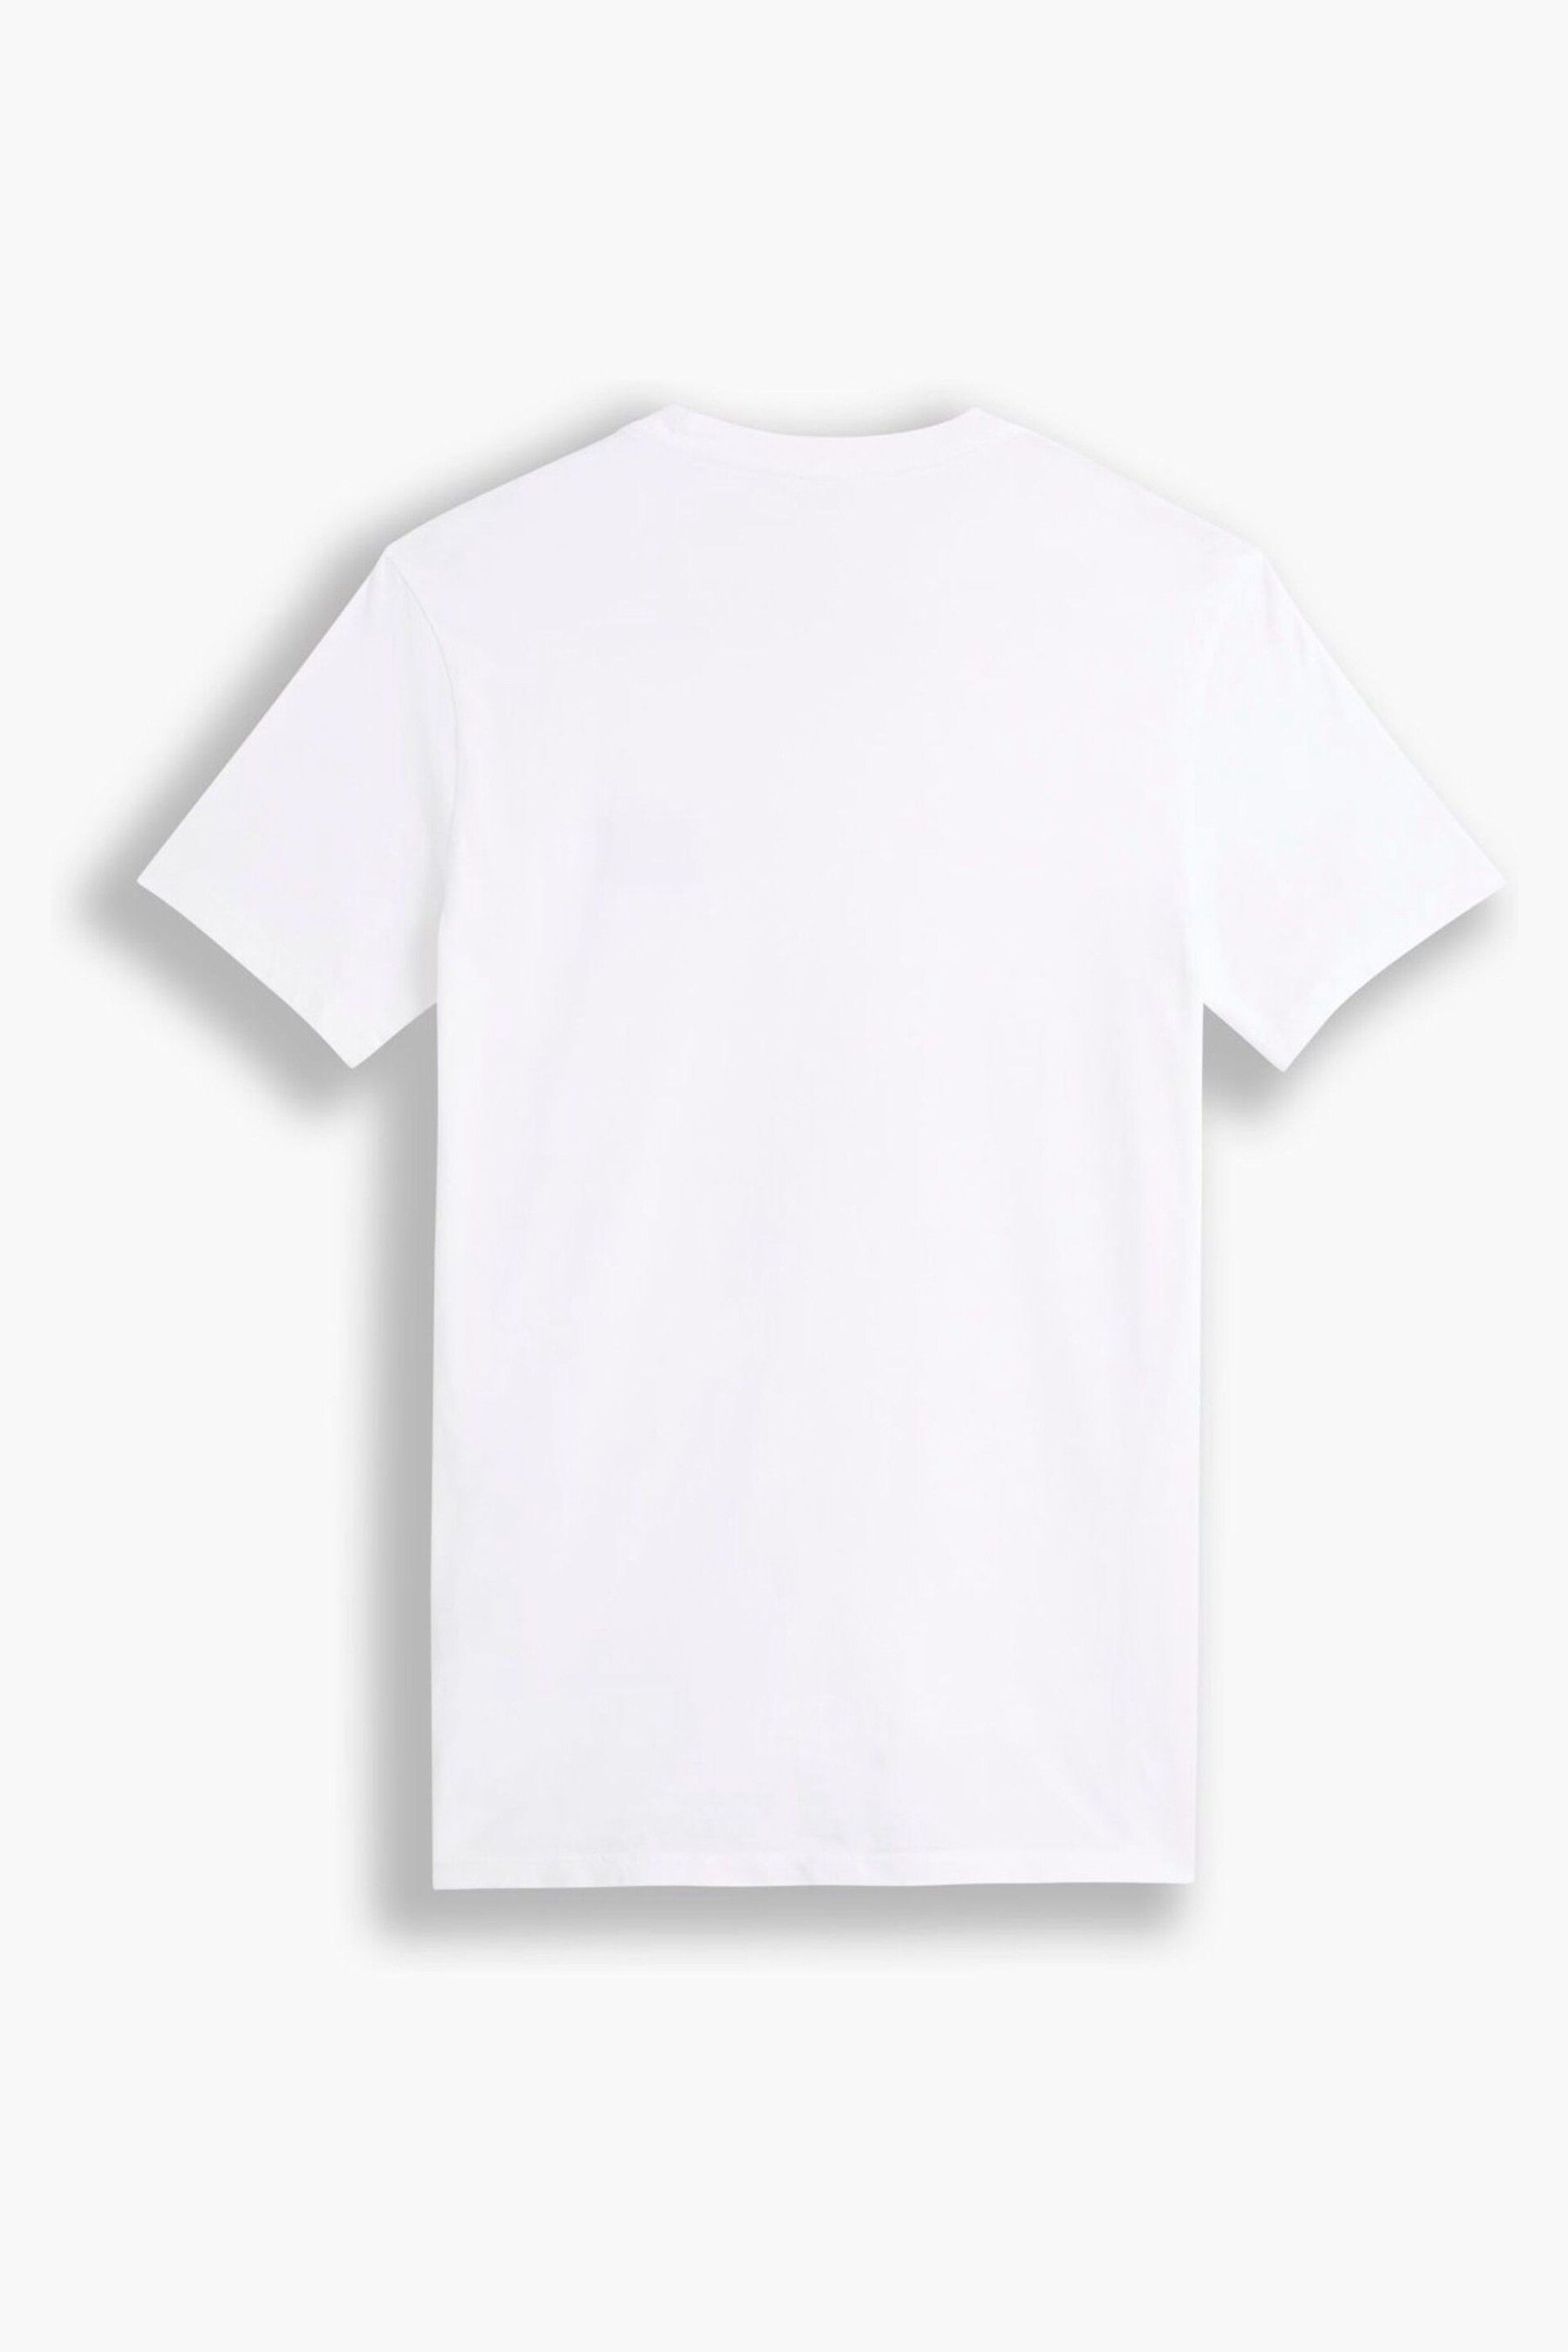 Levi's® White/Blue Mini Crew Neck Sportswear T-Shirts 2 Pack - Image 2 of 7